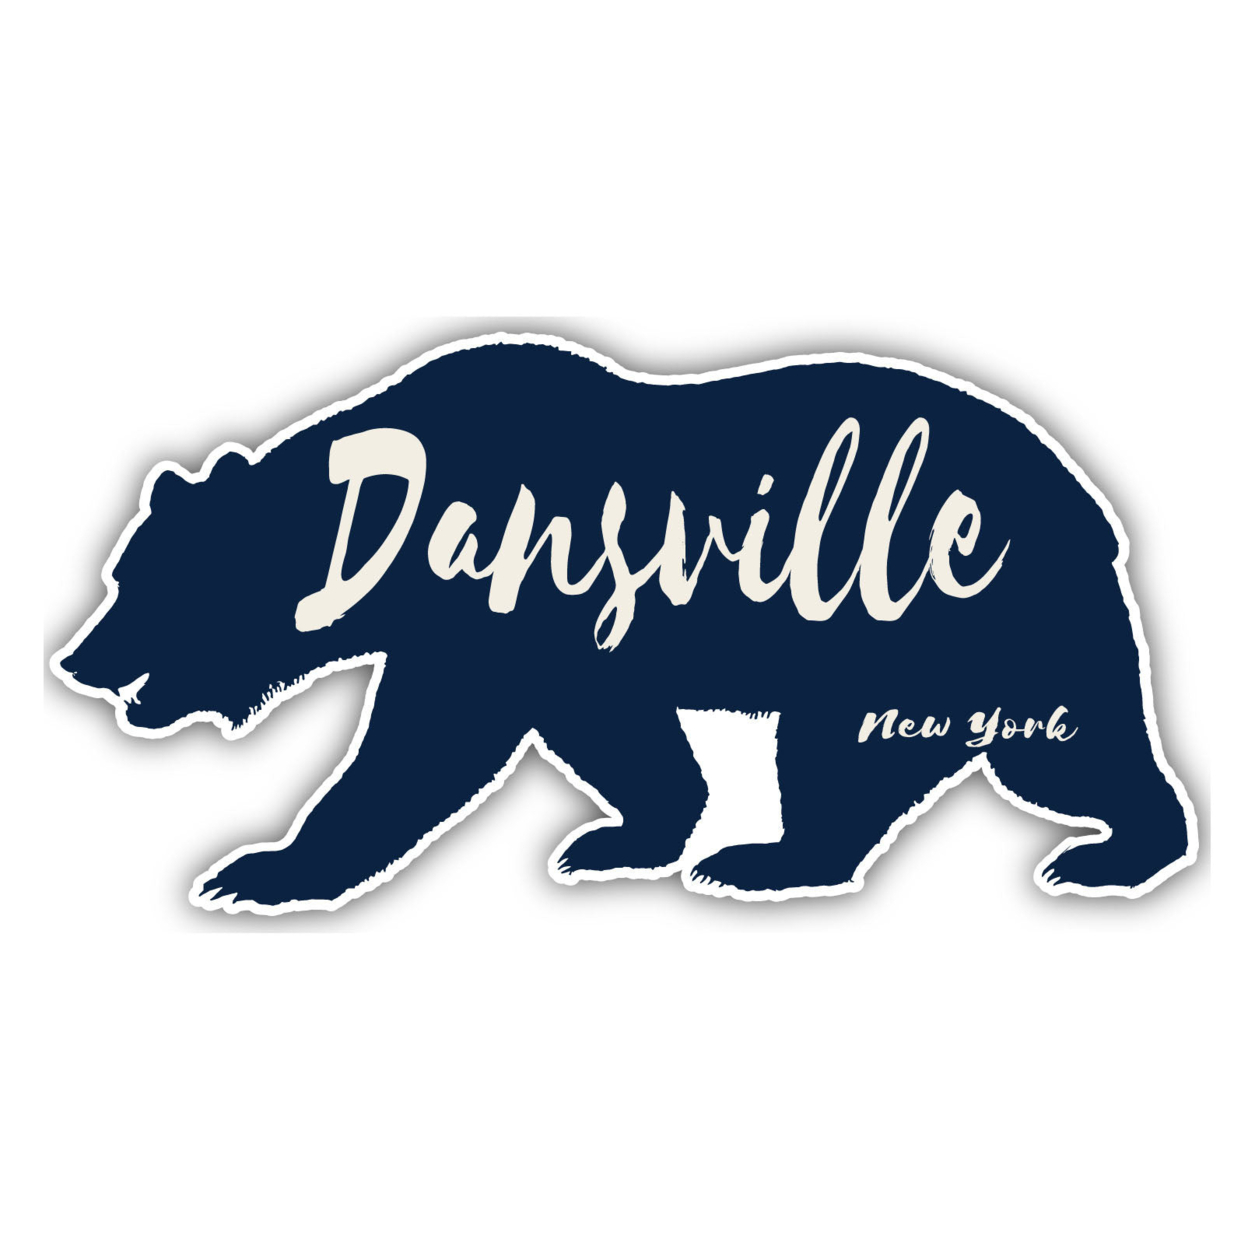 Dansville New York Souvenir Decorative Stickers (Choose Theme And Size) - Single Unit, 2-Inch, Bear